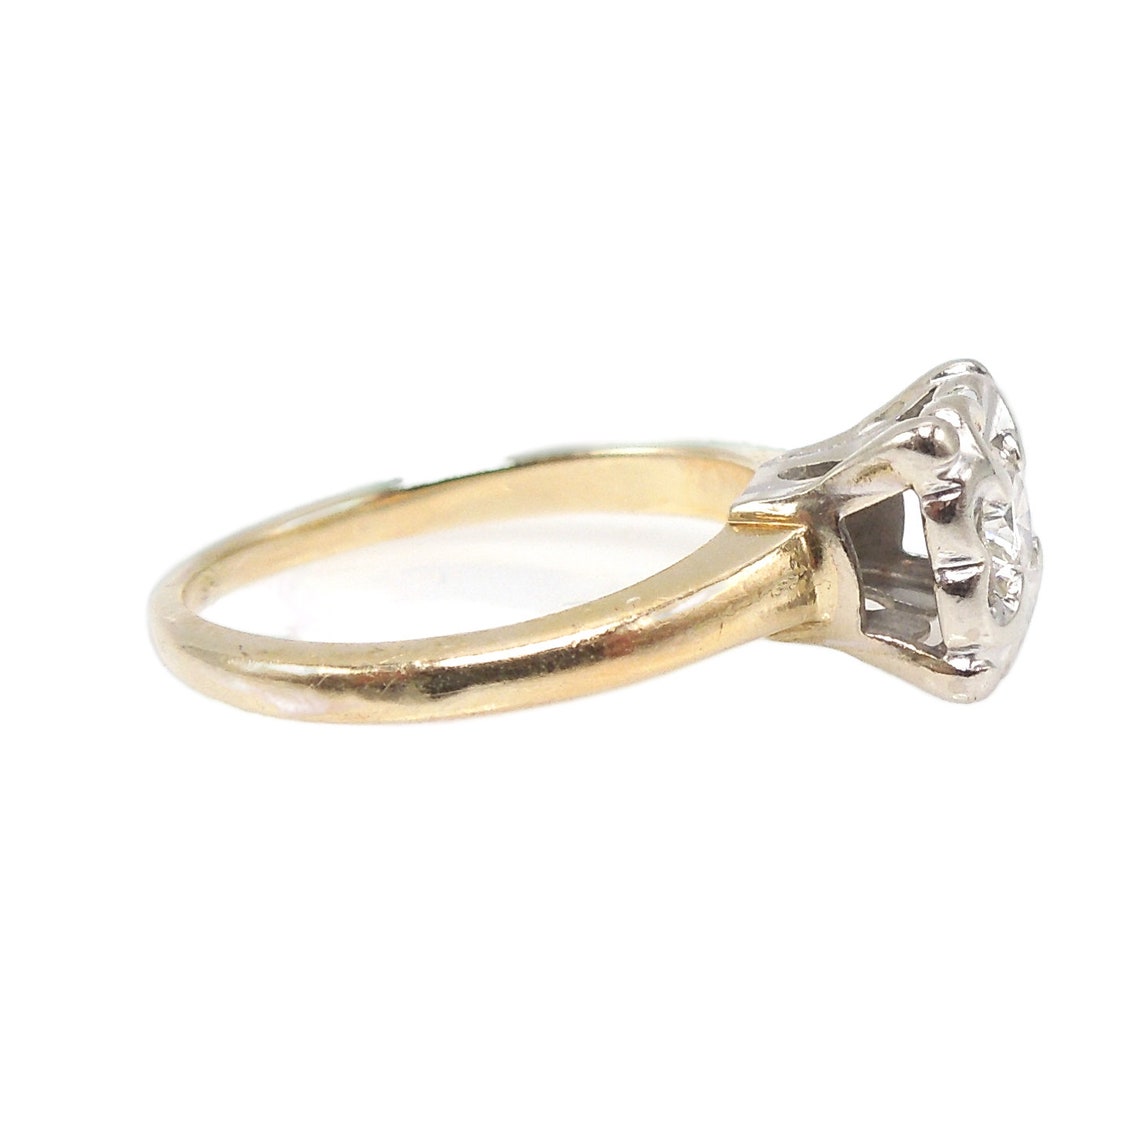 Prism-lite 1940s Diamond Ring in Bicolor Gold Illusion Mount - Etsy